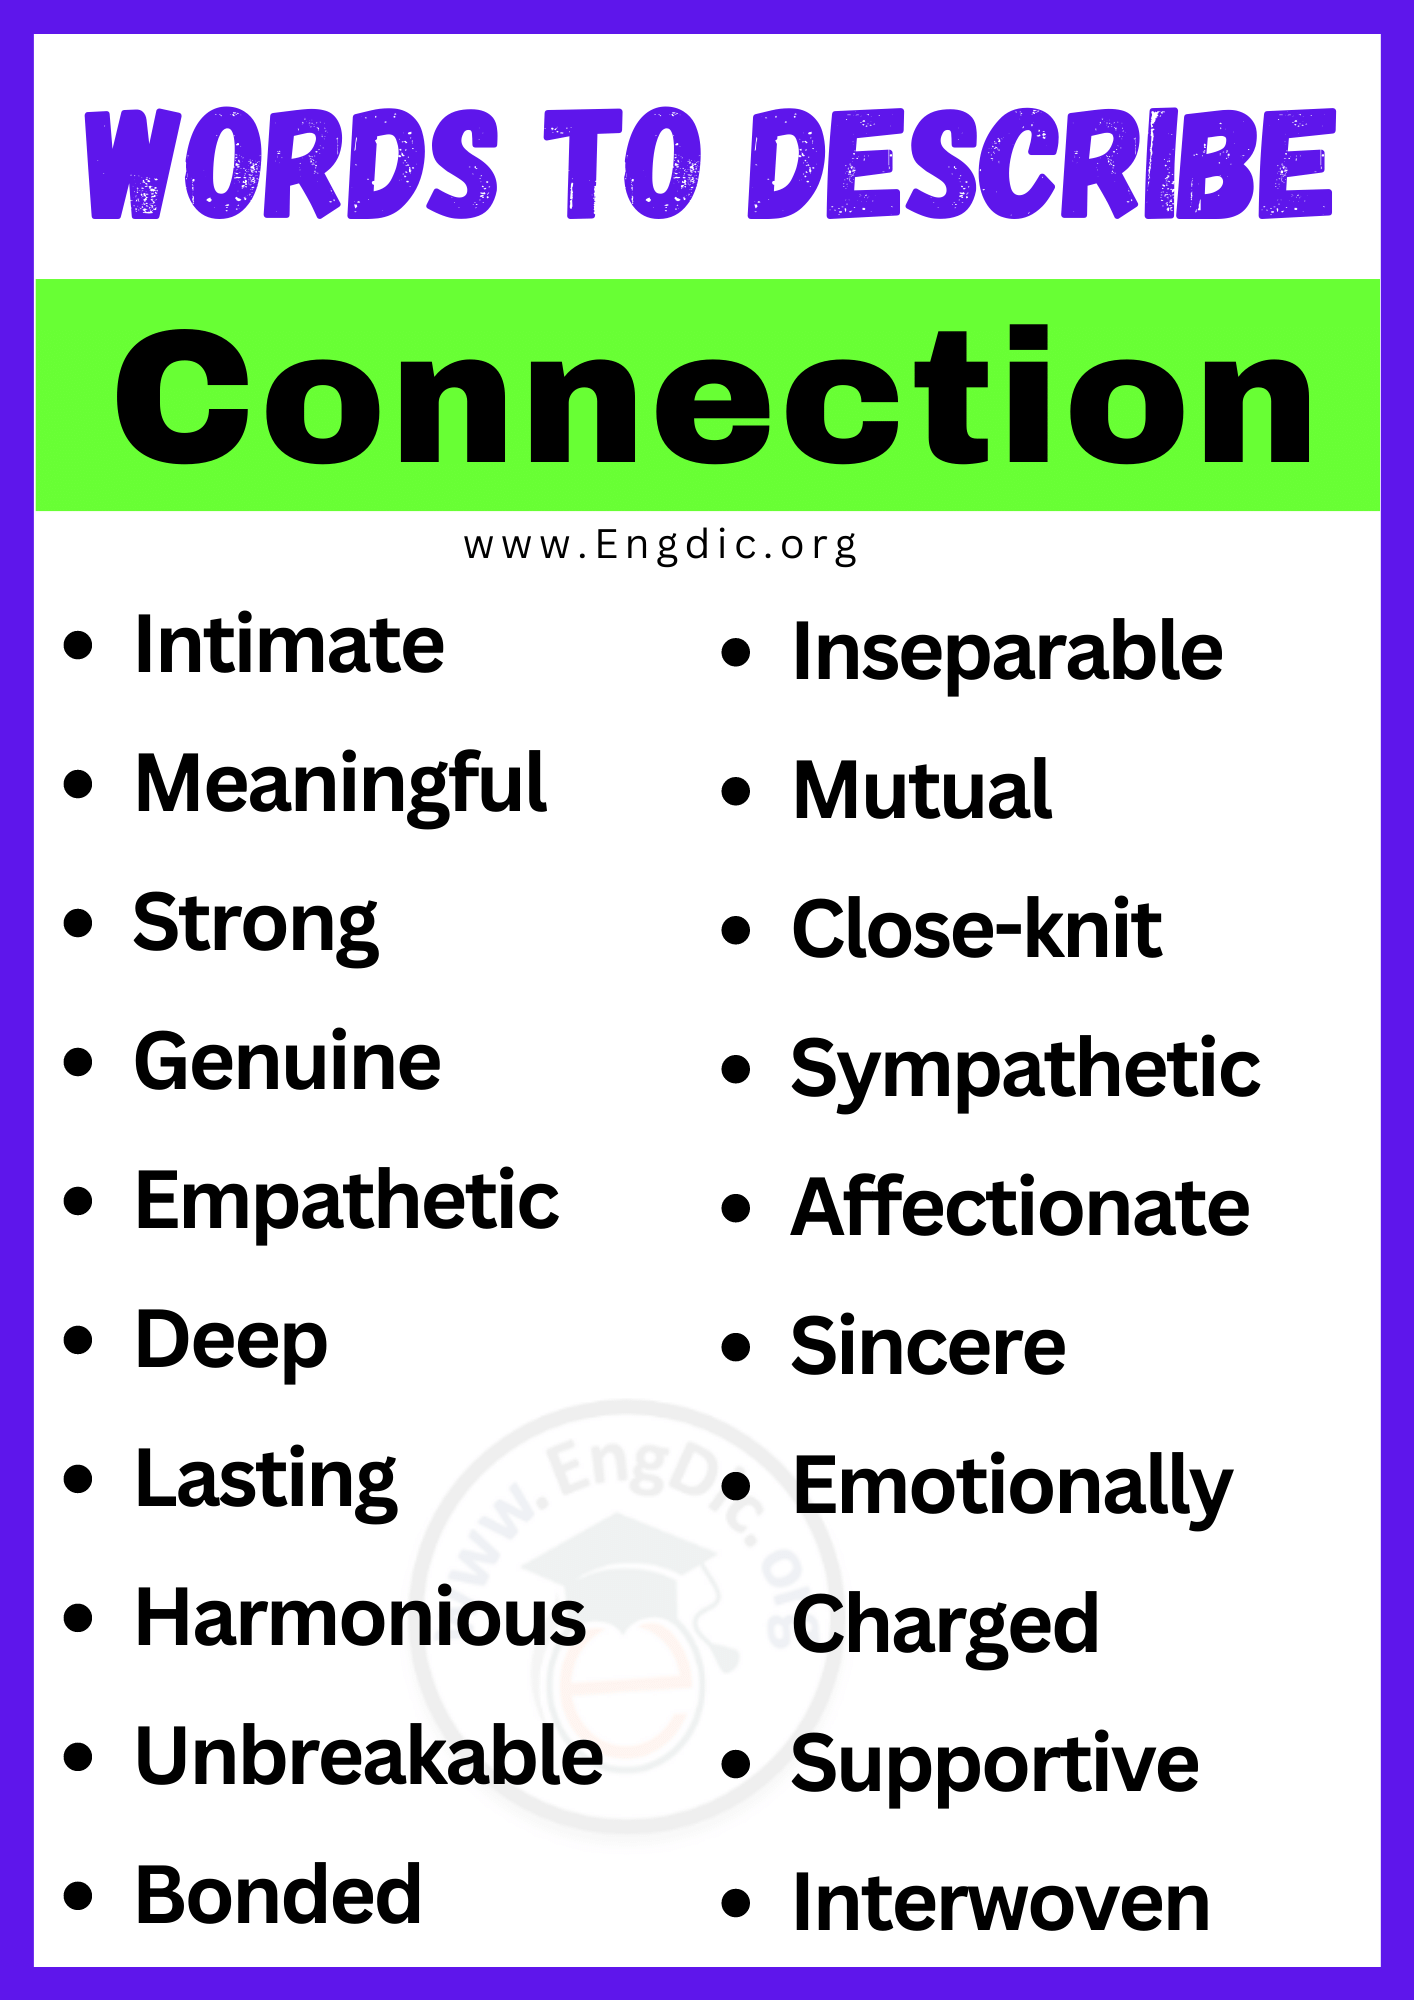 Words to Describe Connection